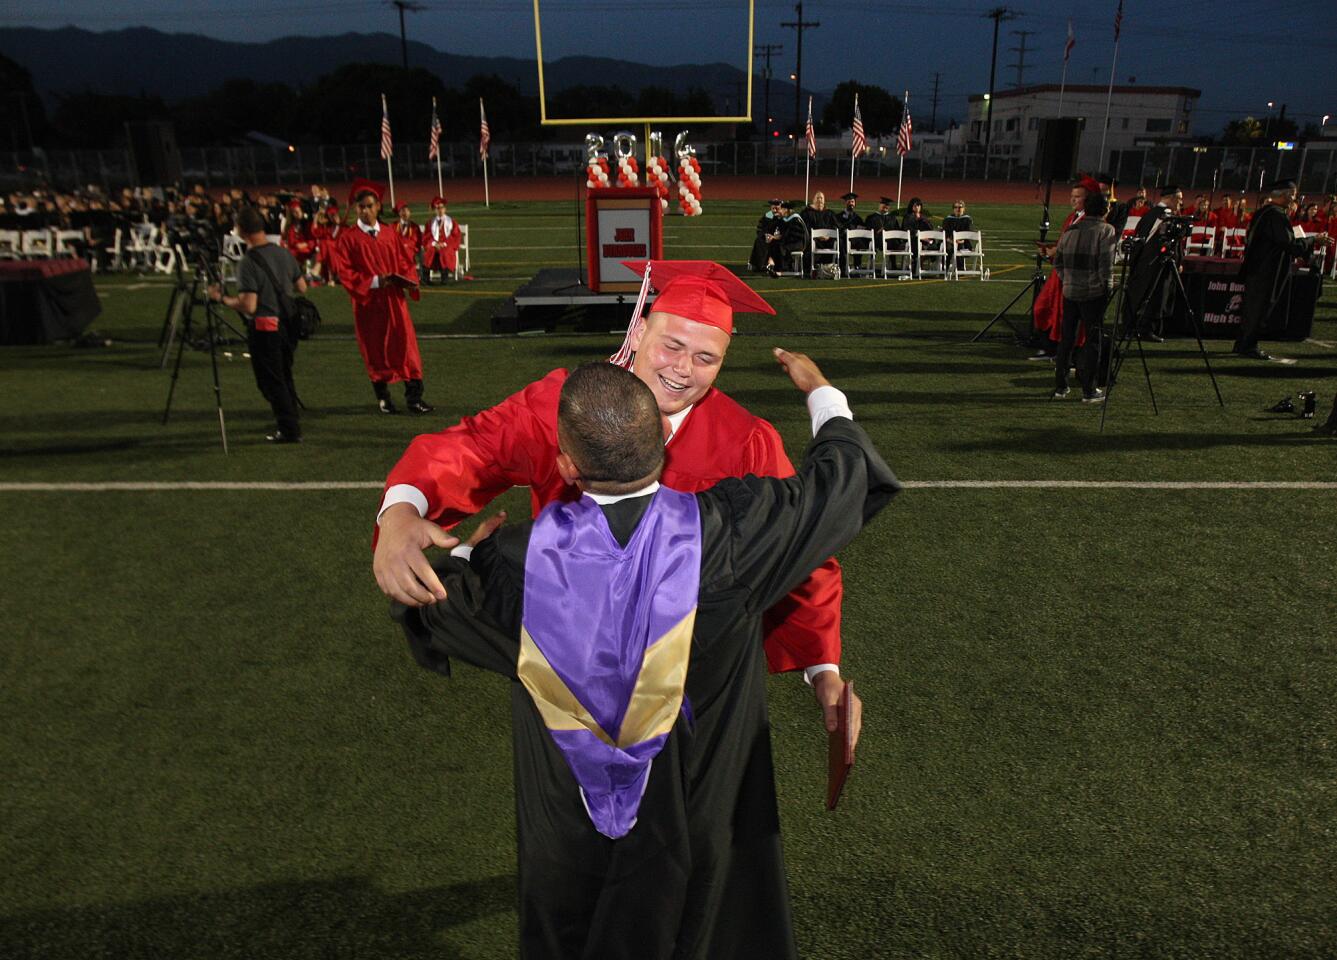 Graduate Jacob Pentland hugs school Principal John Paramo after graduating at the Burroughs High School graduation on Thursday, May 29, 2014.